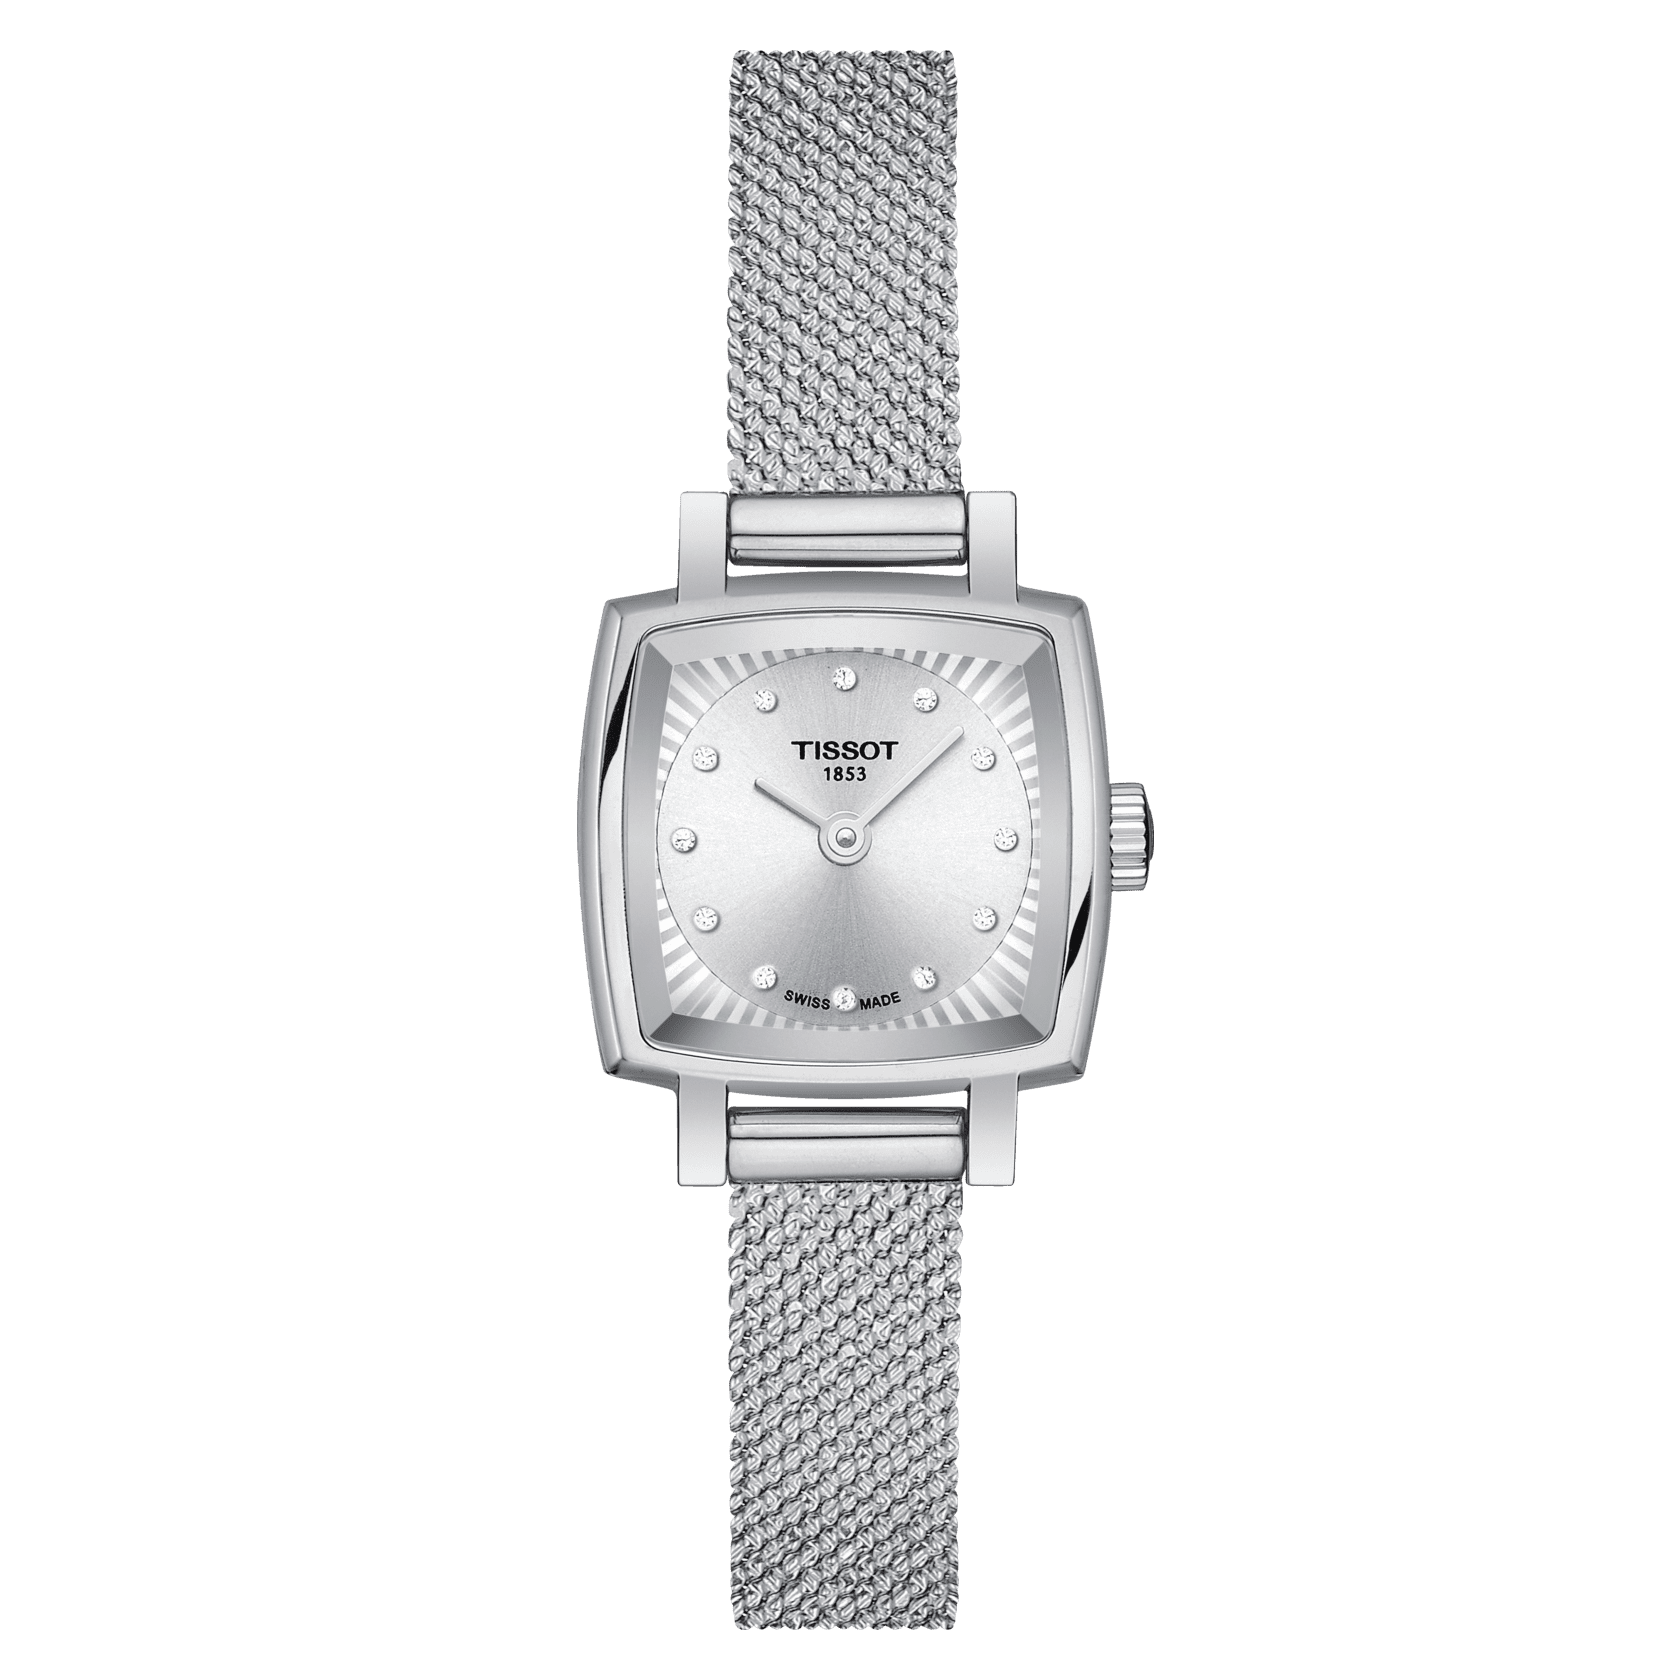 Dhgate Best Swiss Replica Watches